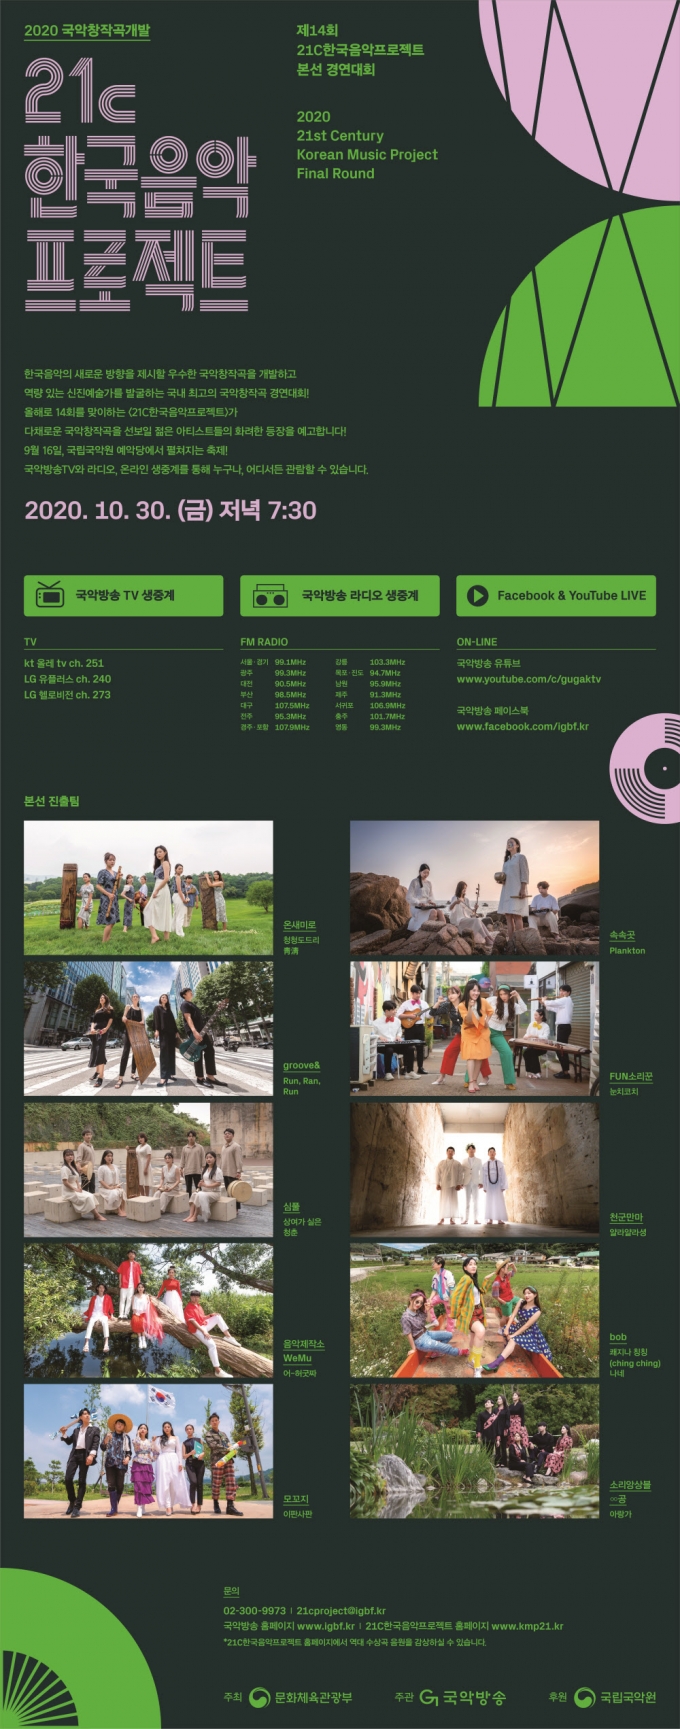 '21C 한국음악프로젝트' 그룹 그루브앤(groove&) 대상